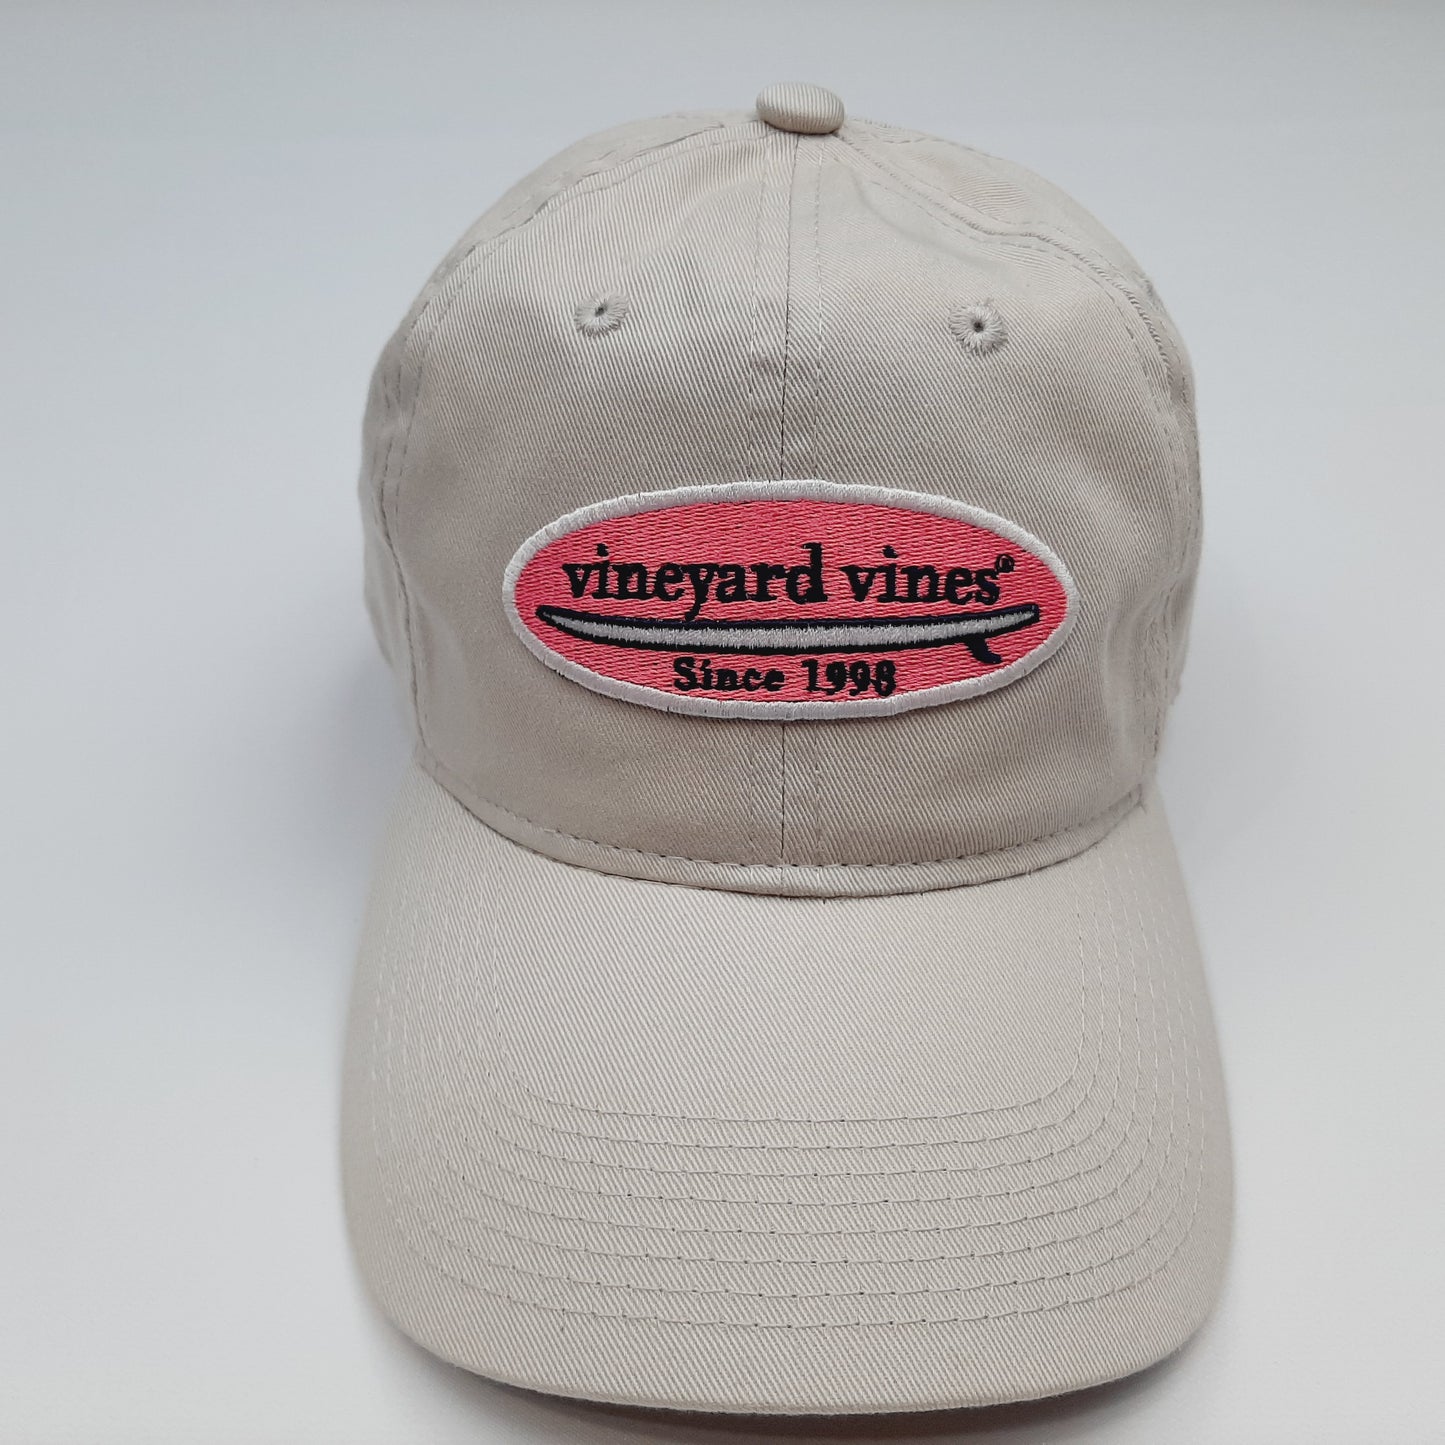 Vineyard Vines Embroidered Patch Beige 100% Cotton 6 Panel Cap Hat Adjustable Buckle